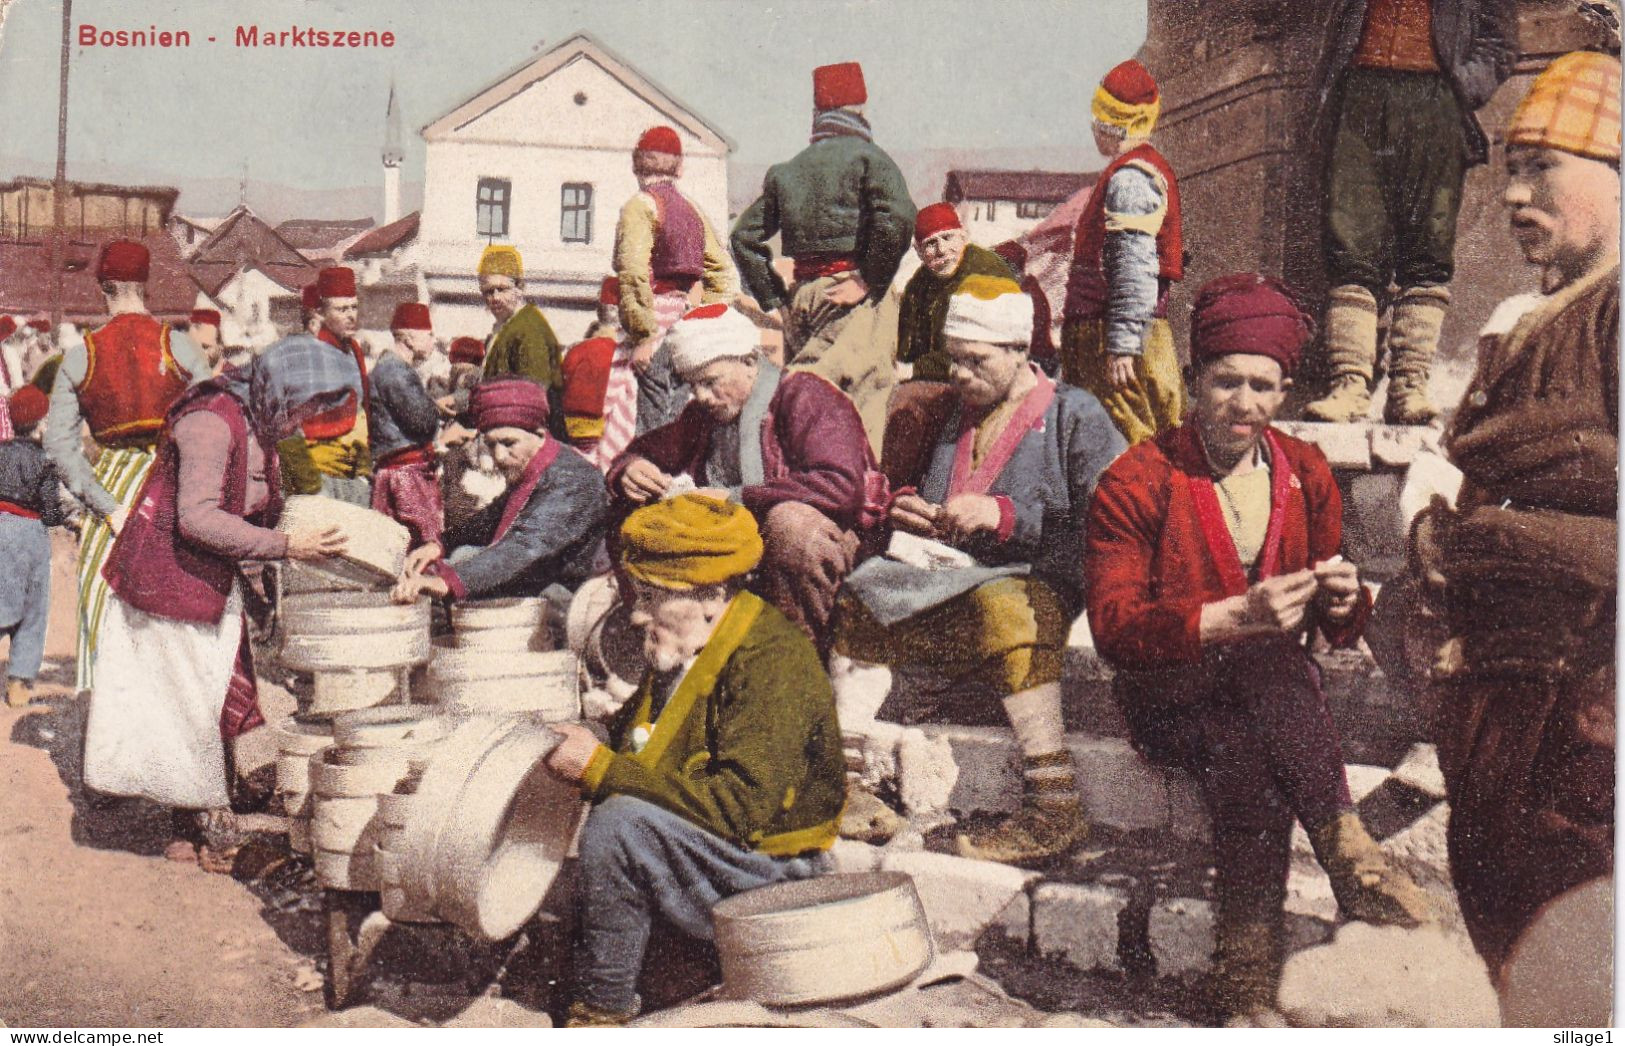 KuK - SARAJEVO BOSNIE - Bosnien - Marktszene  Carte Postale Ancienne Colorisée  - Marché Vieux Métiers WW1 - Bosnie-Herzegovine